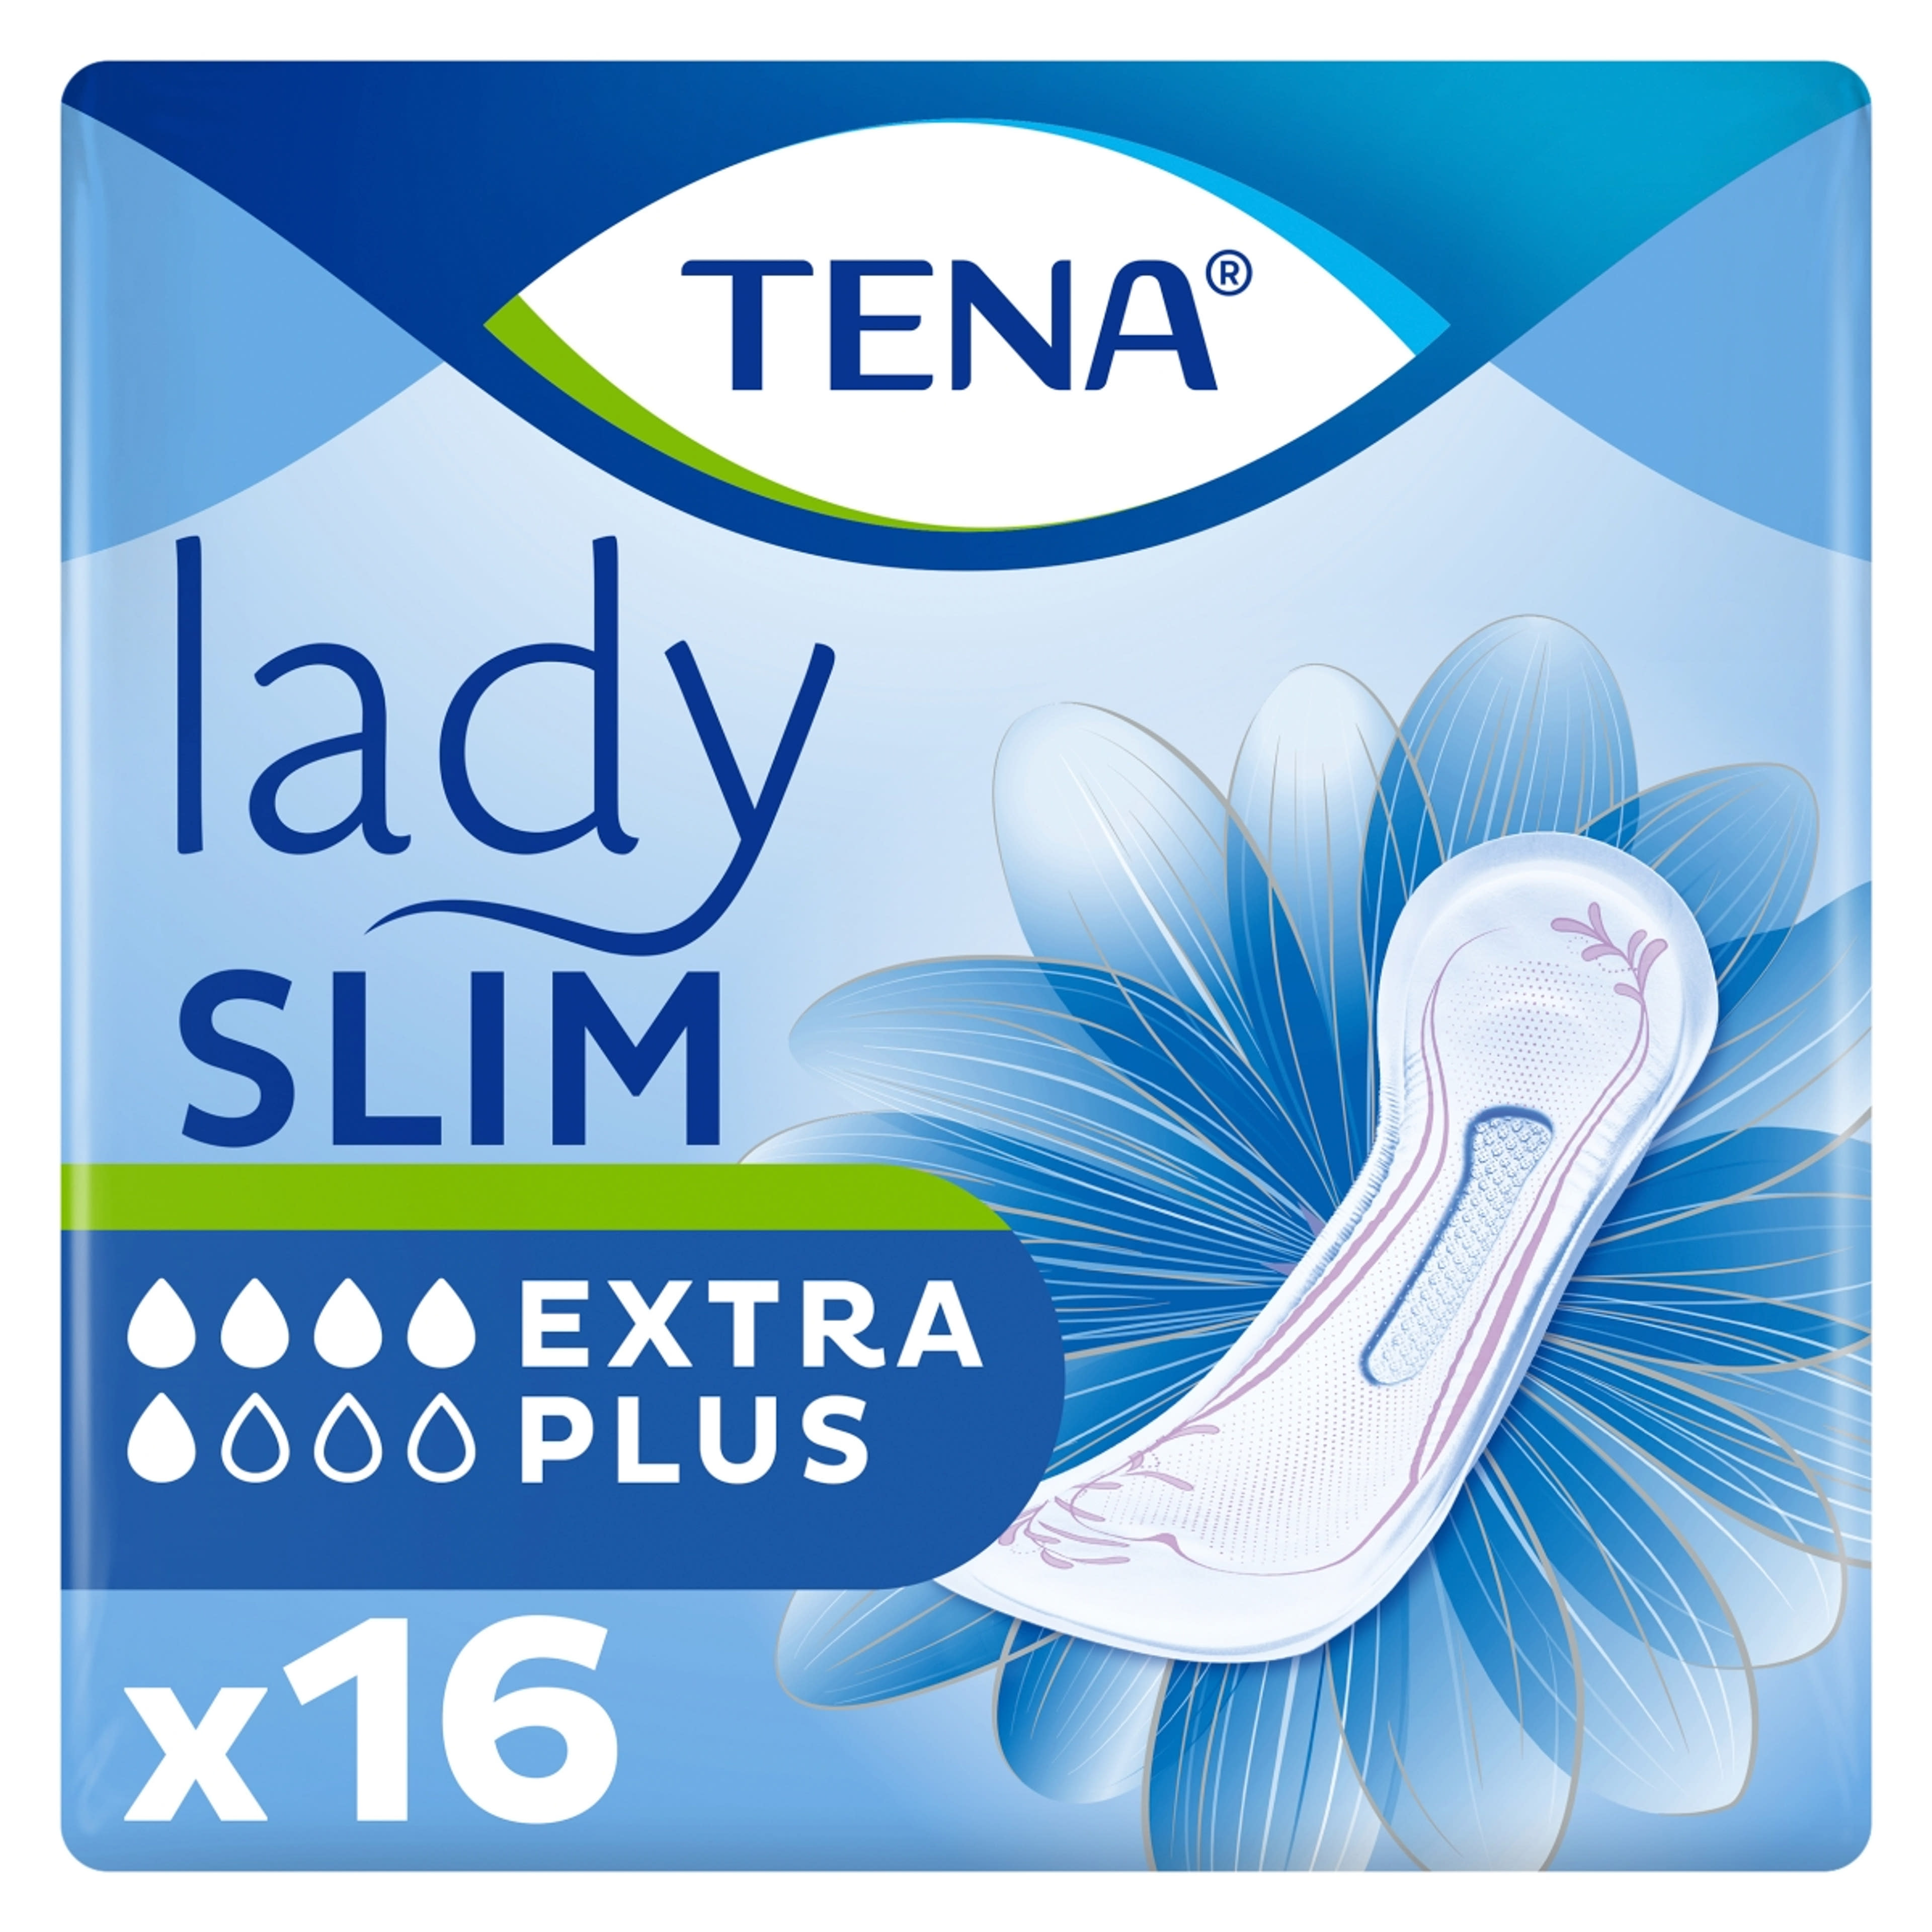 Tena Lady inkontinencia betét extra plus - 16 db-3